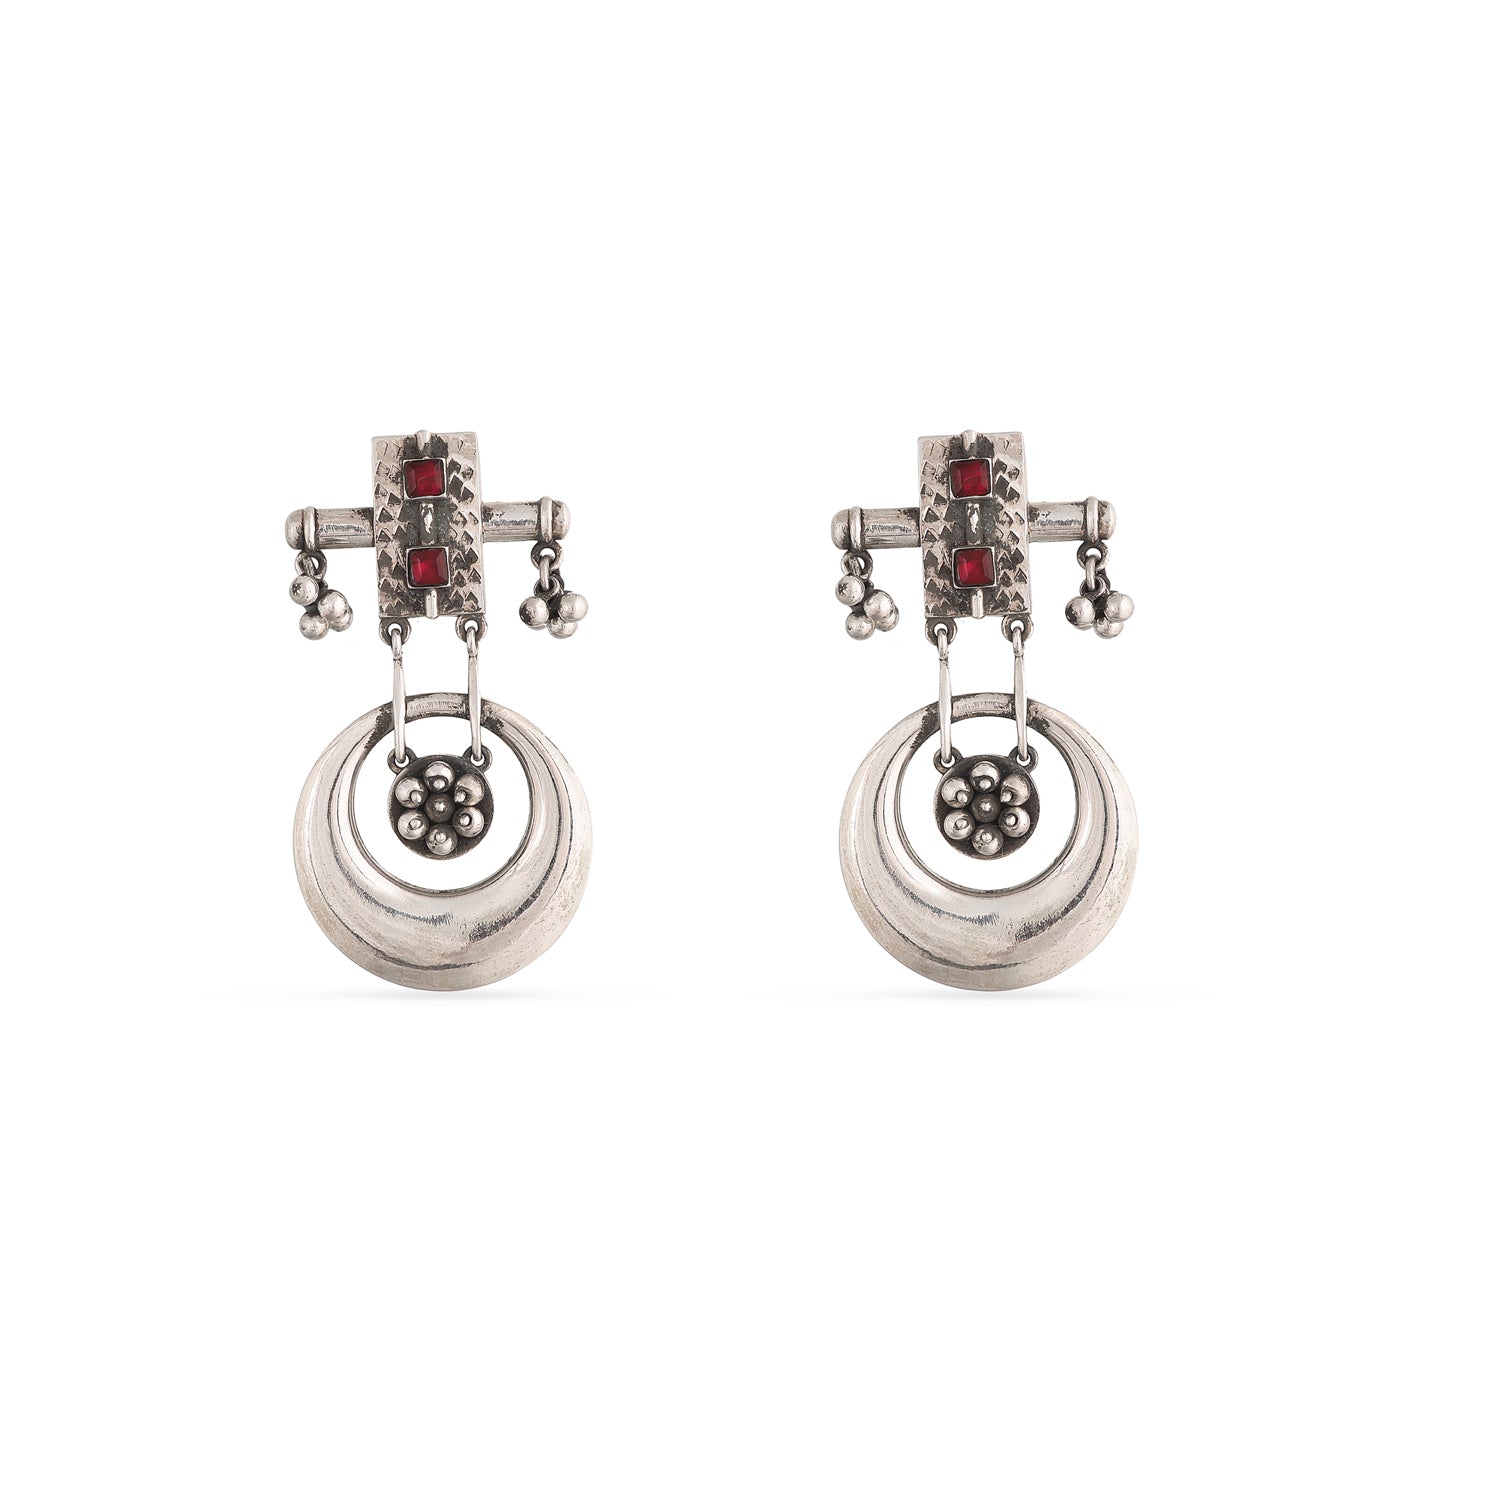 Buy Digital Dress Room German Oxidized Silver Earrings Ganesha Engraved  Jhumkas with Pearls Earrings at Amazon.in